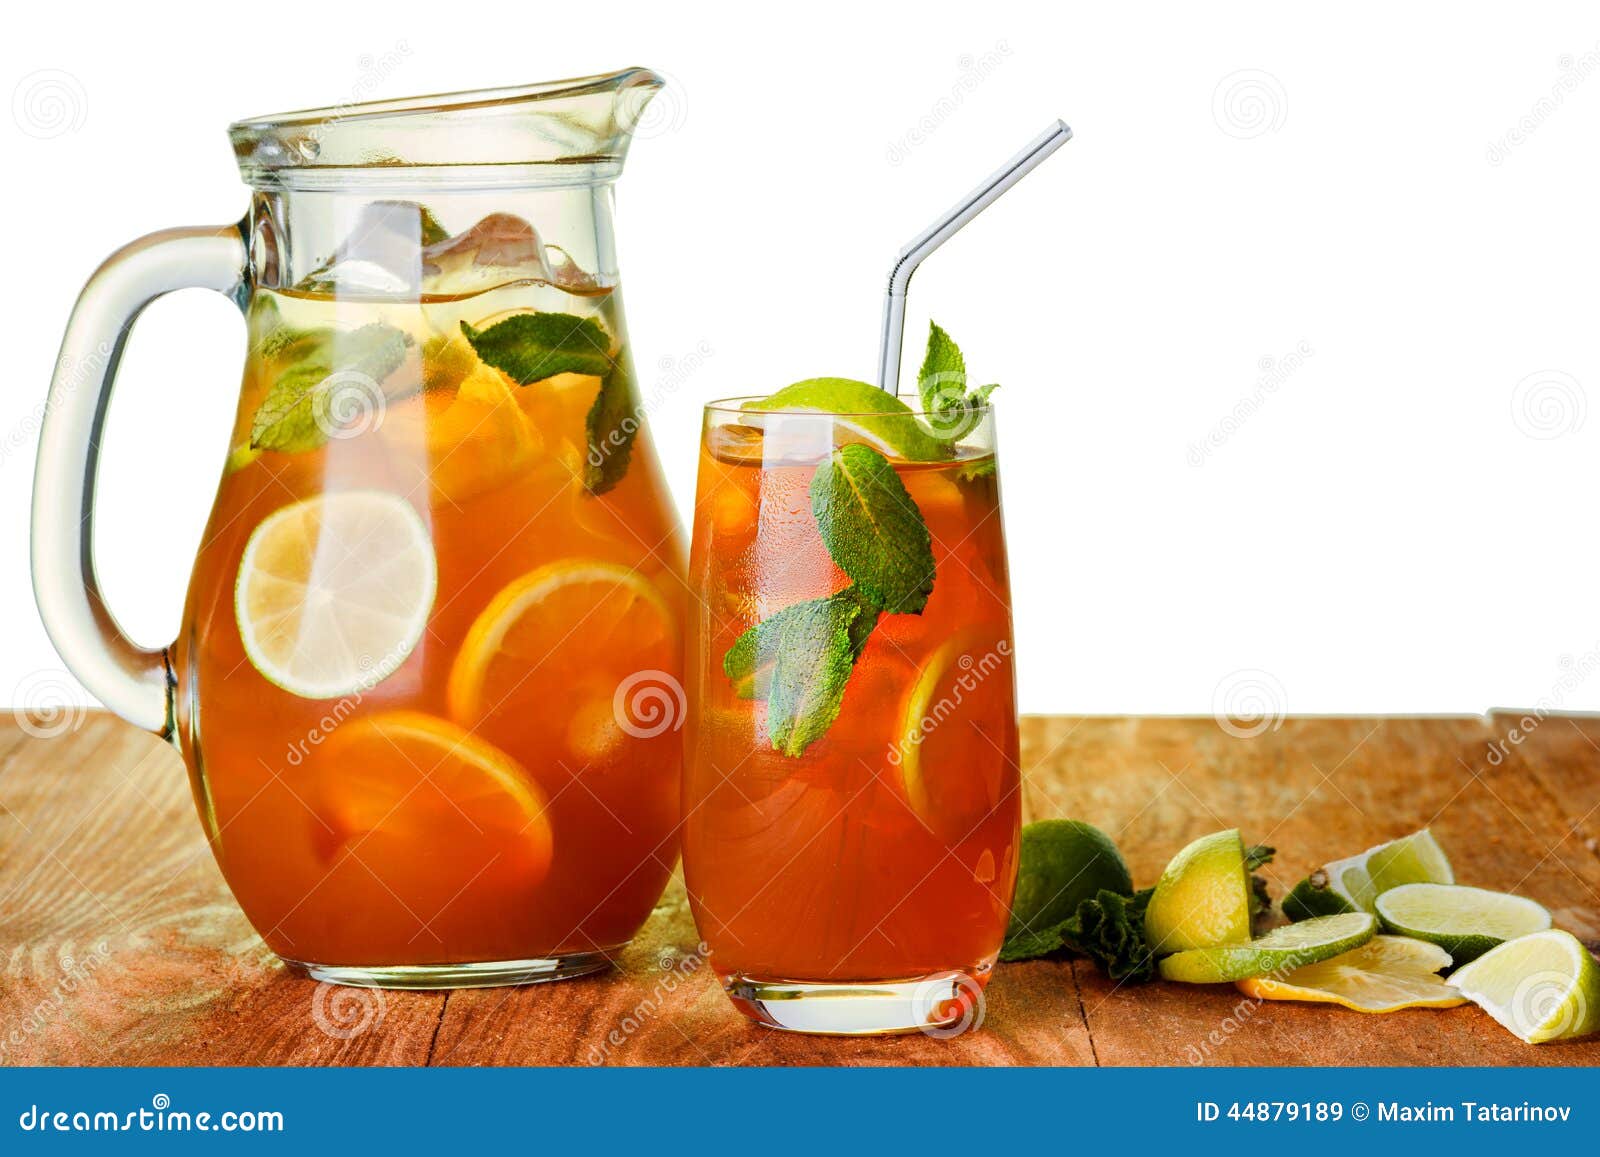 https://thumbs.dreamstime.com/z/iced-tea-pitcher-glass-jug-cold-drink-lemon-mint-wooden-table-over-plain-white-background-44879189.jpg